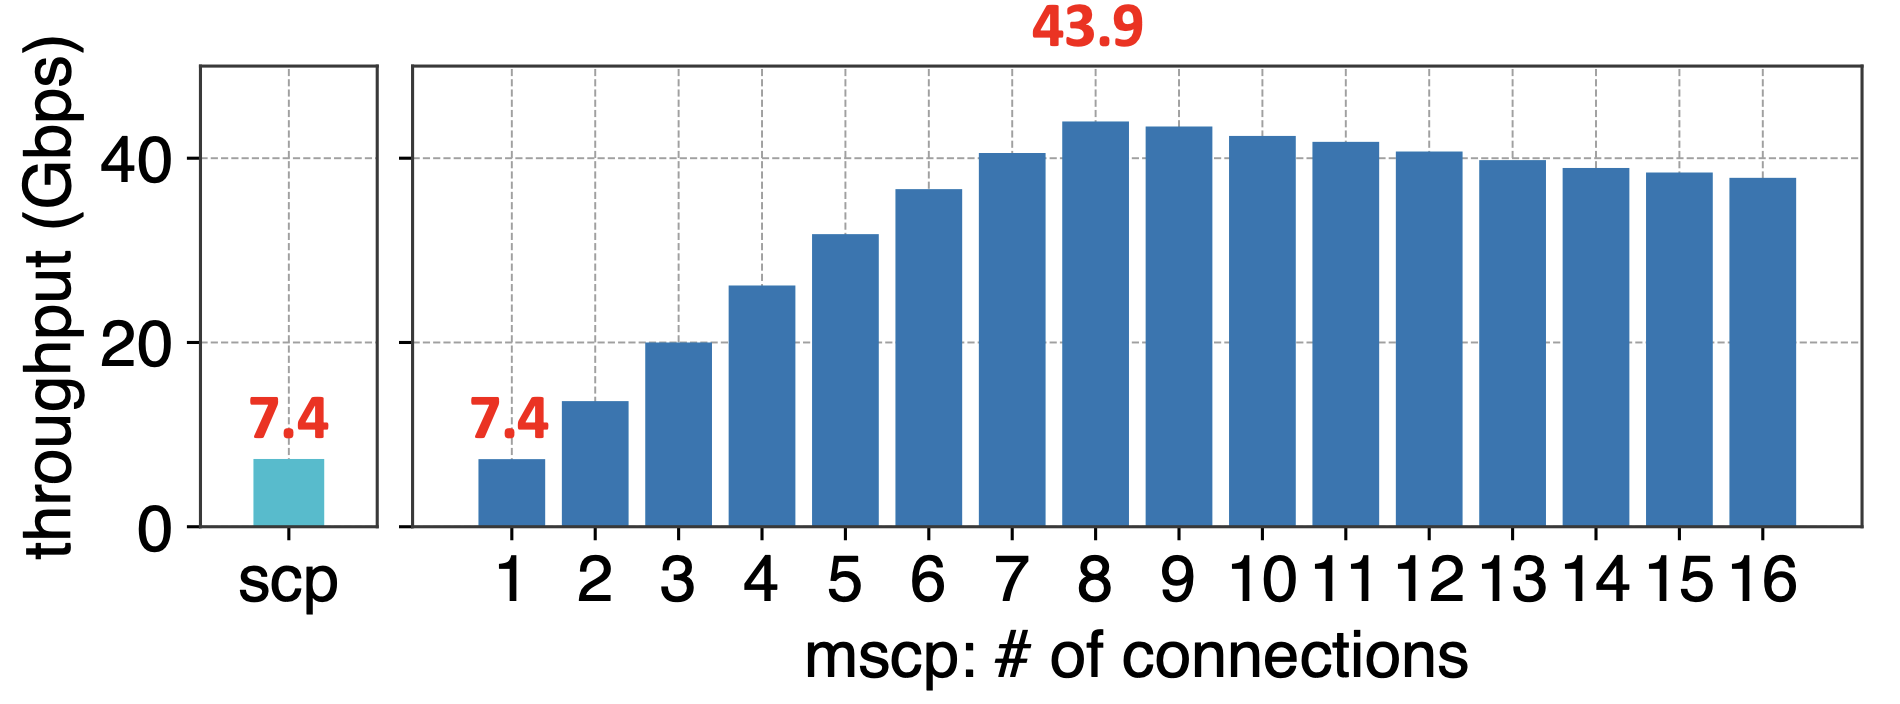 mscpを用いた同時接続数と転送速度の関係の試験結果